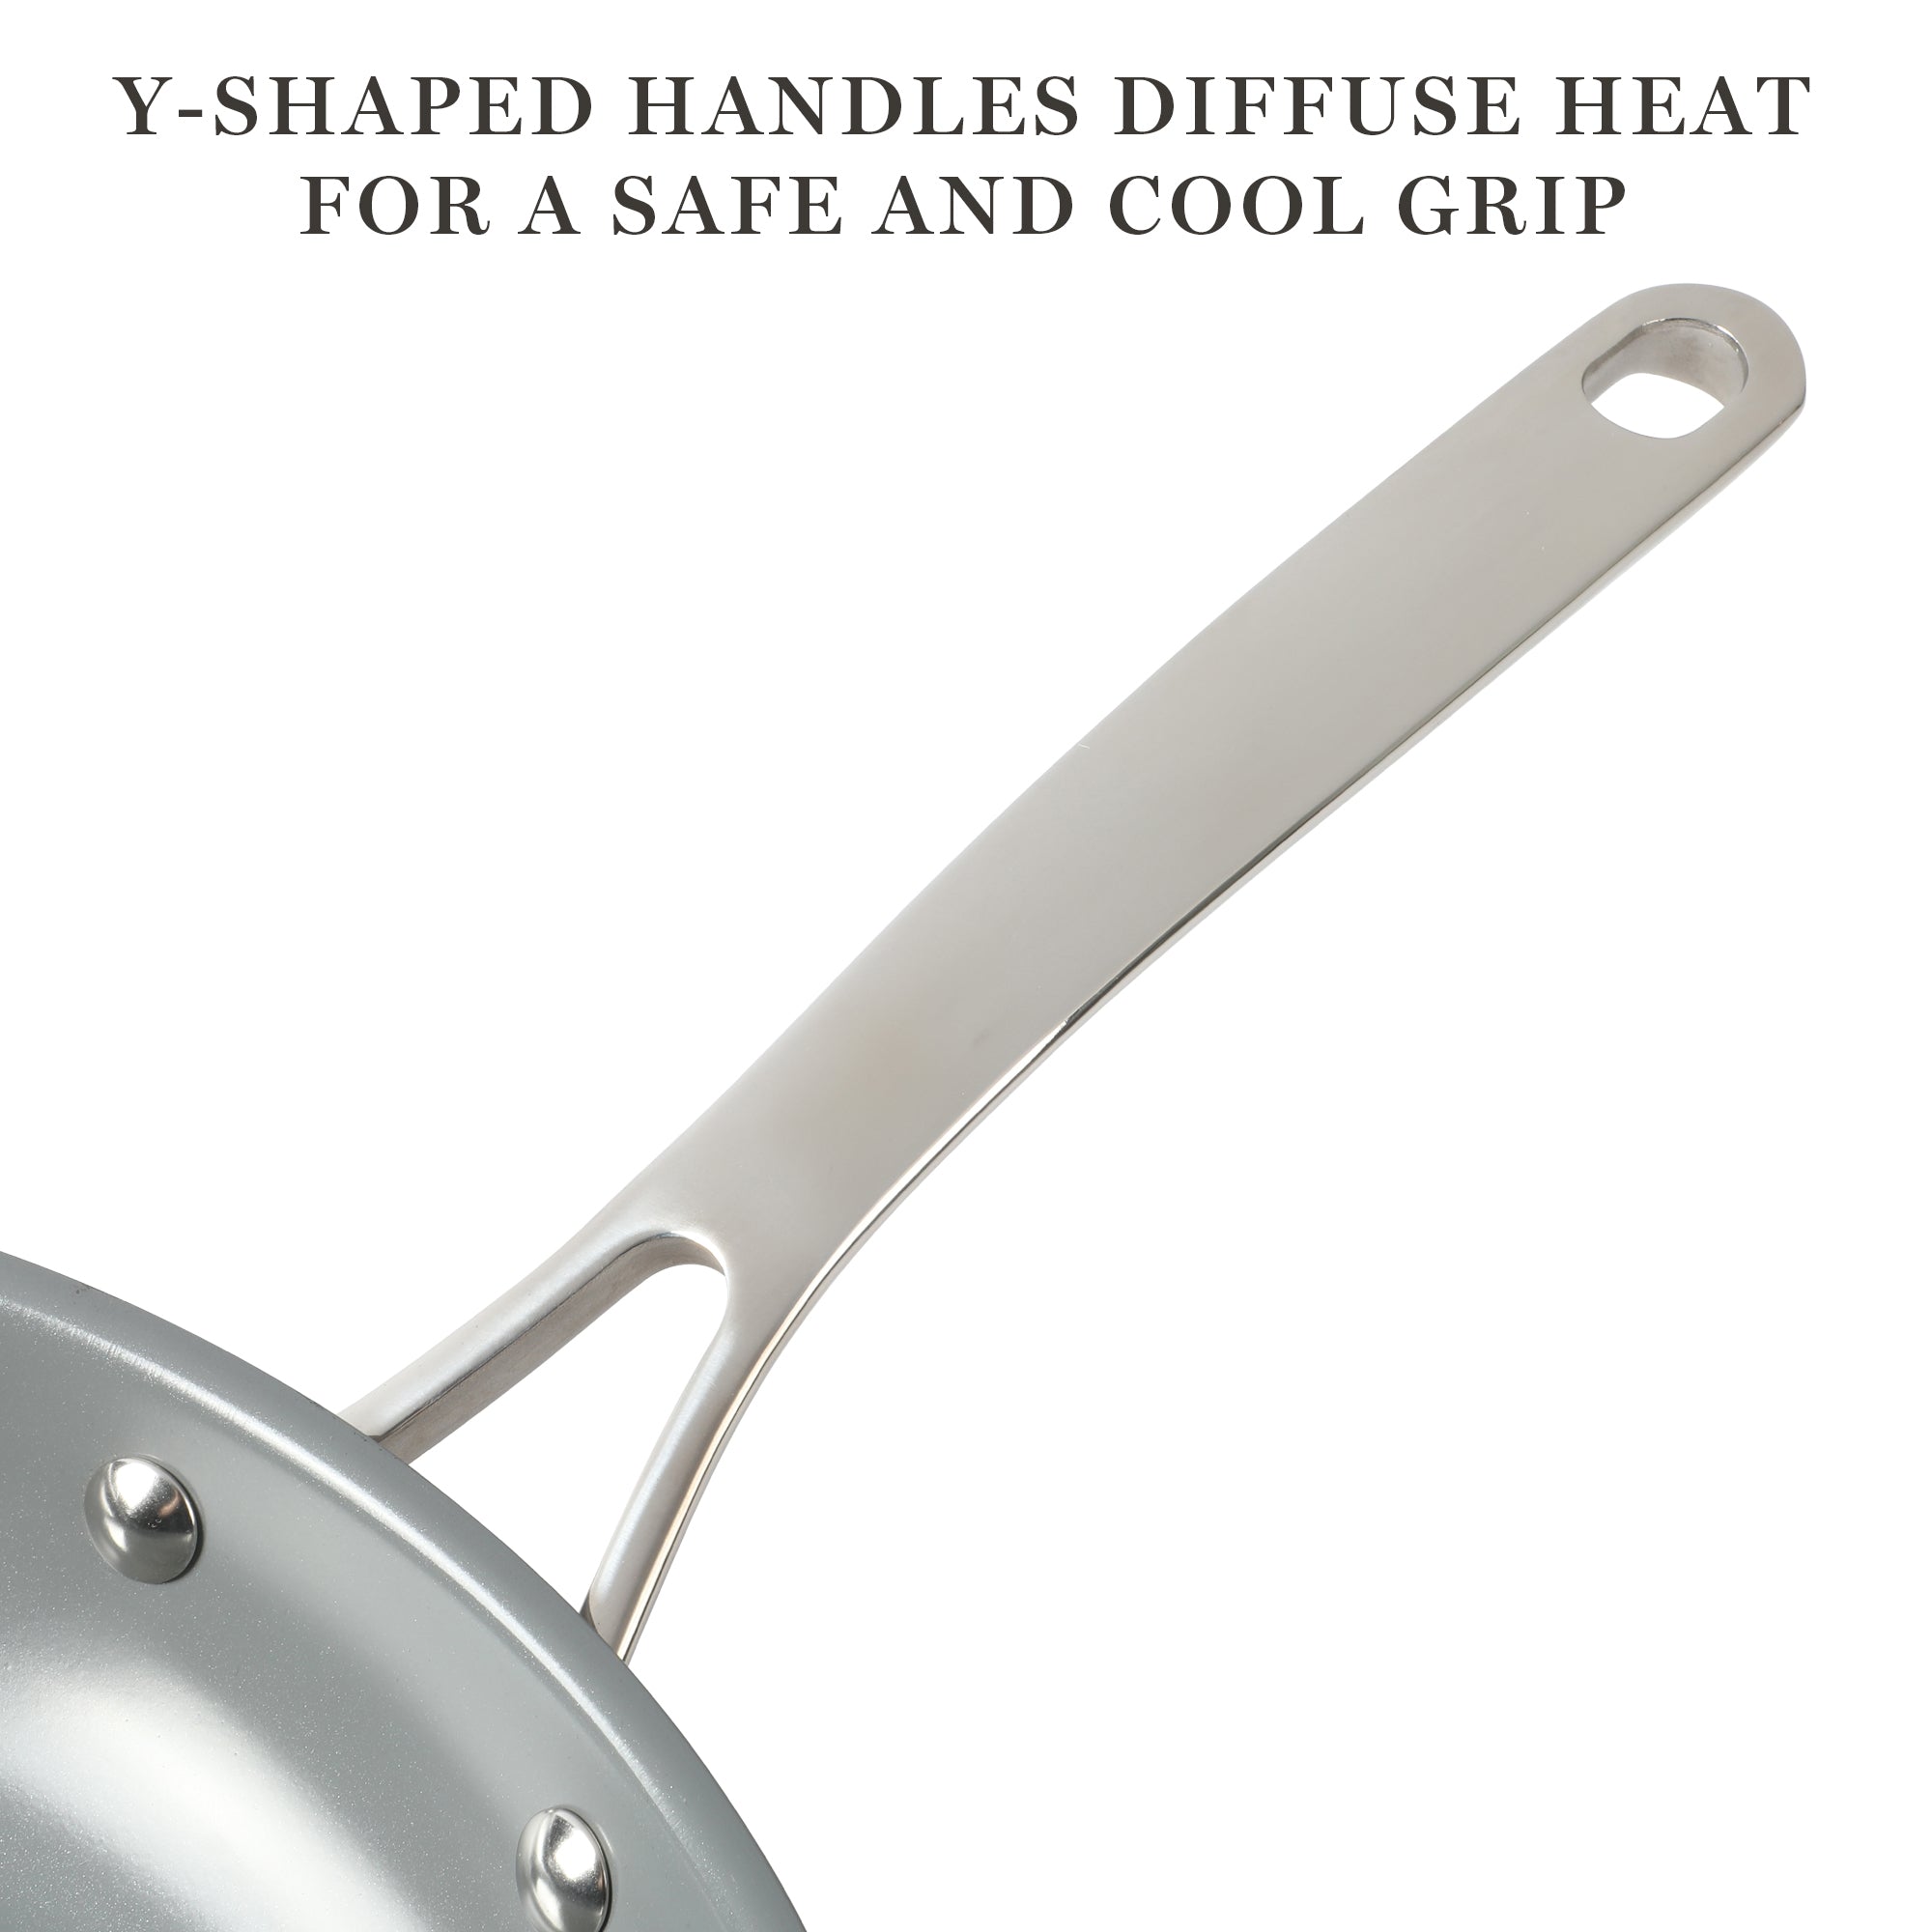 Martha Stewart Delaroux 9.5" & 12" Stainless Steel Fry Pan Set w/ Ceramic Non-Stick Interior